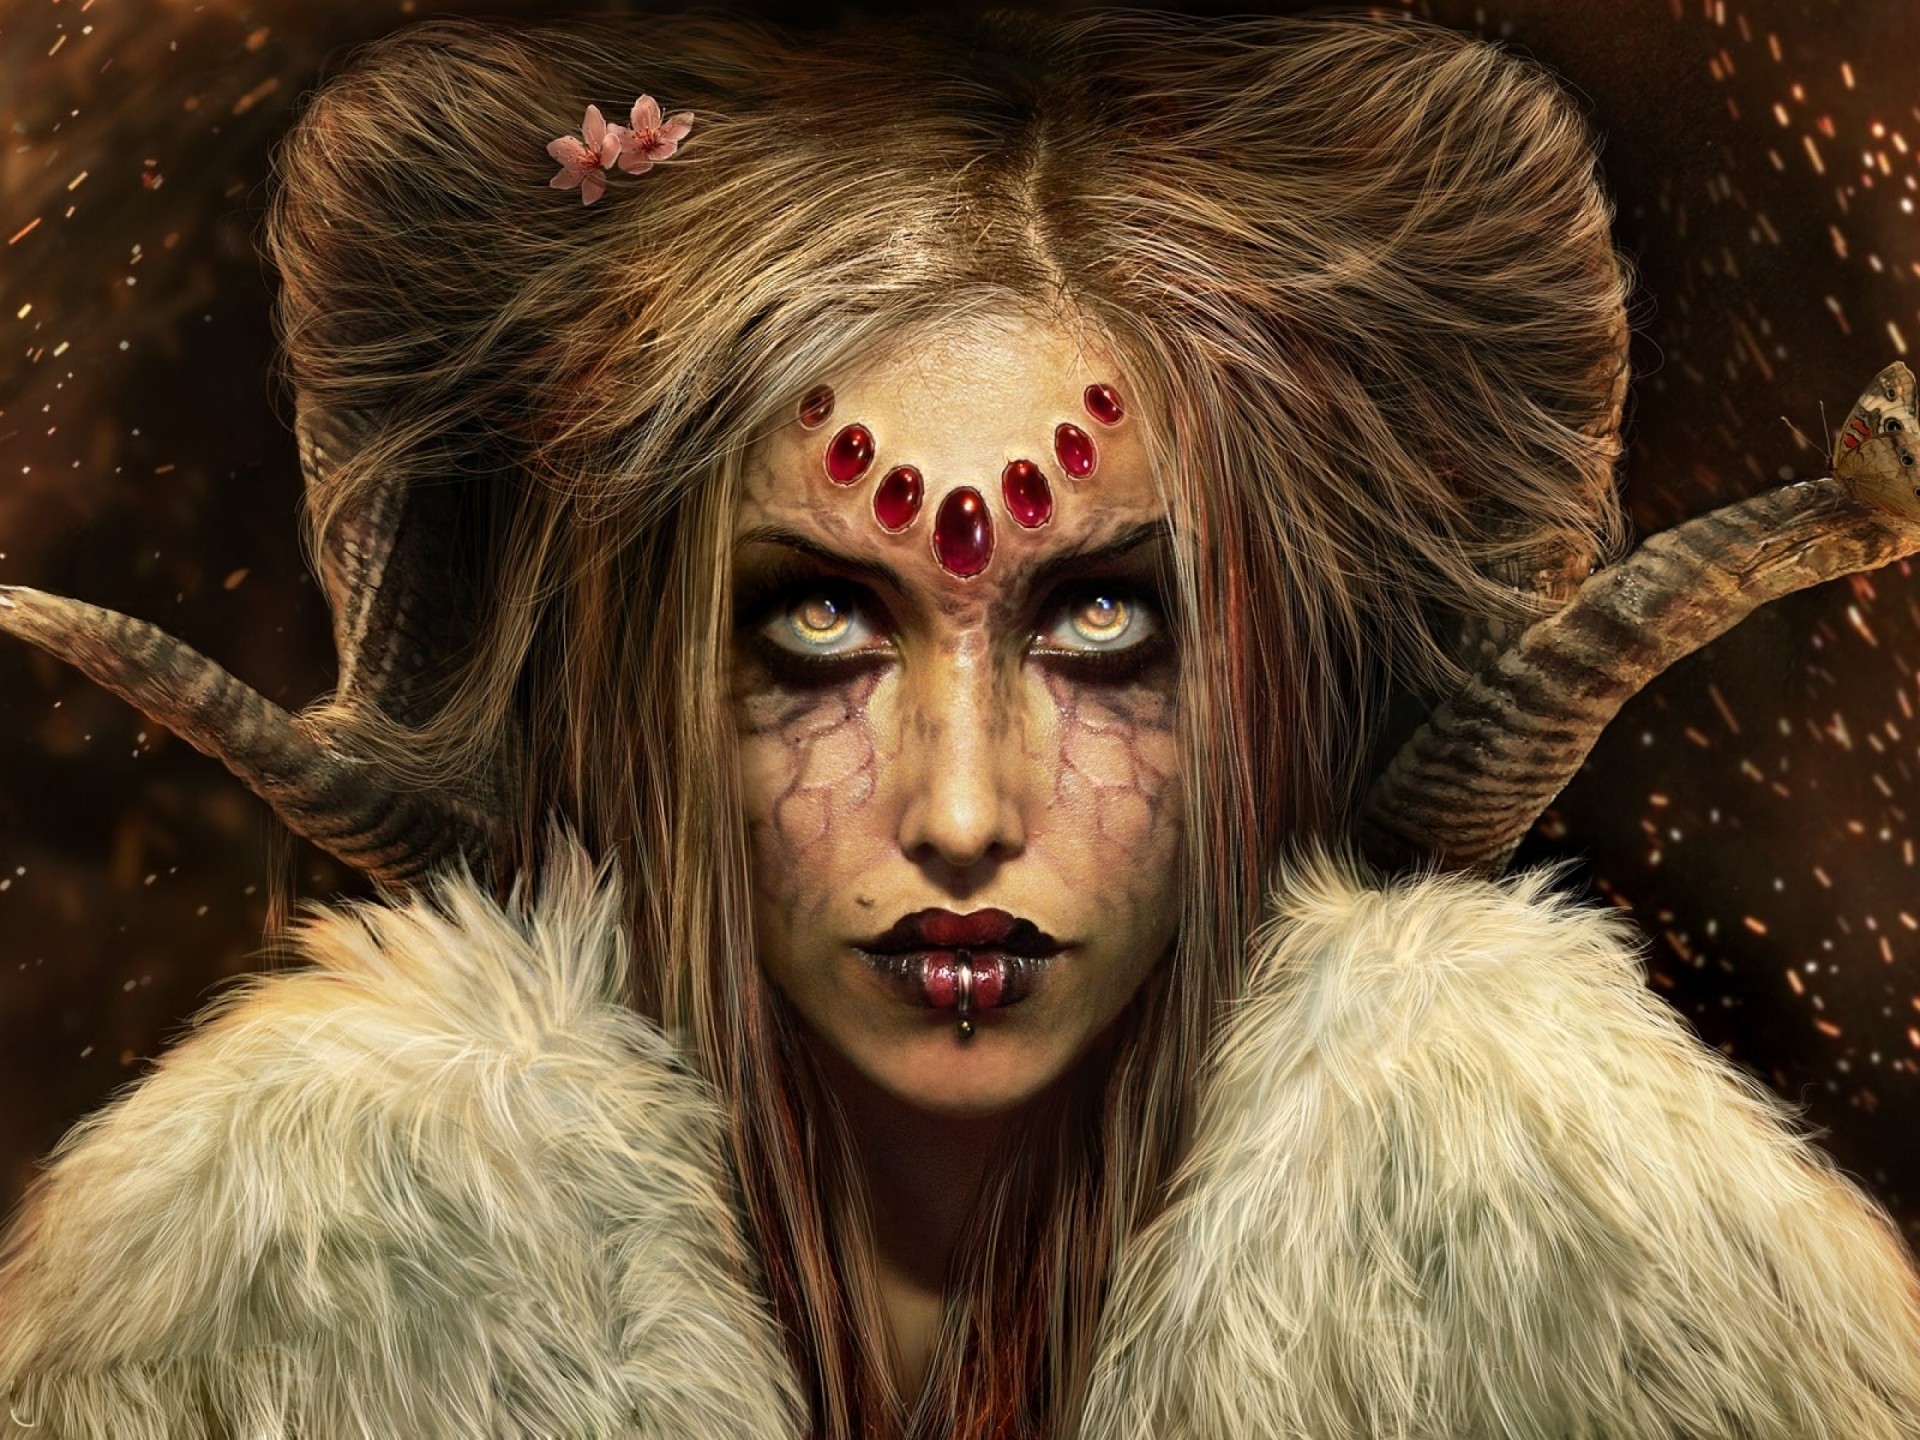 General 1920x1440 demon women fantasy girl horns flower in hair yellow eyes fantasy art